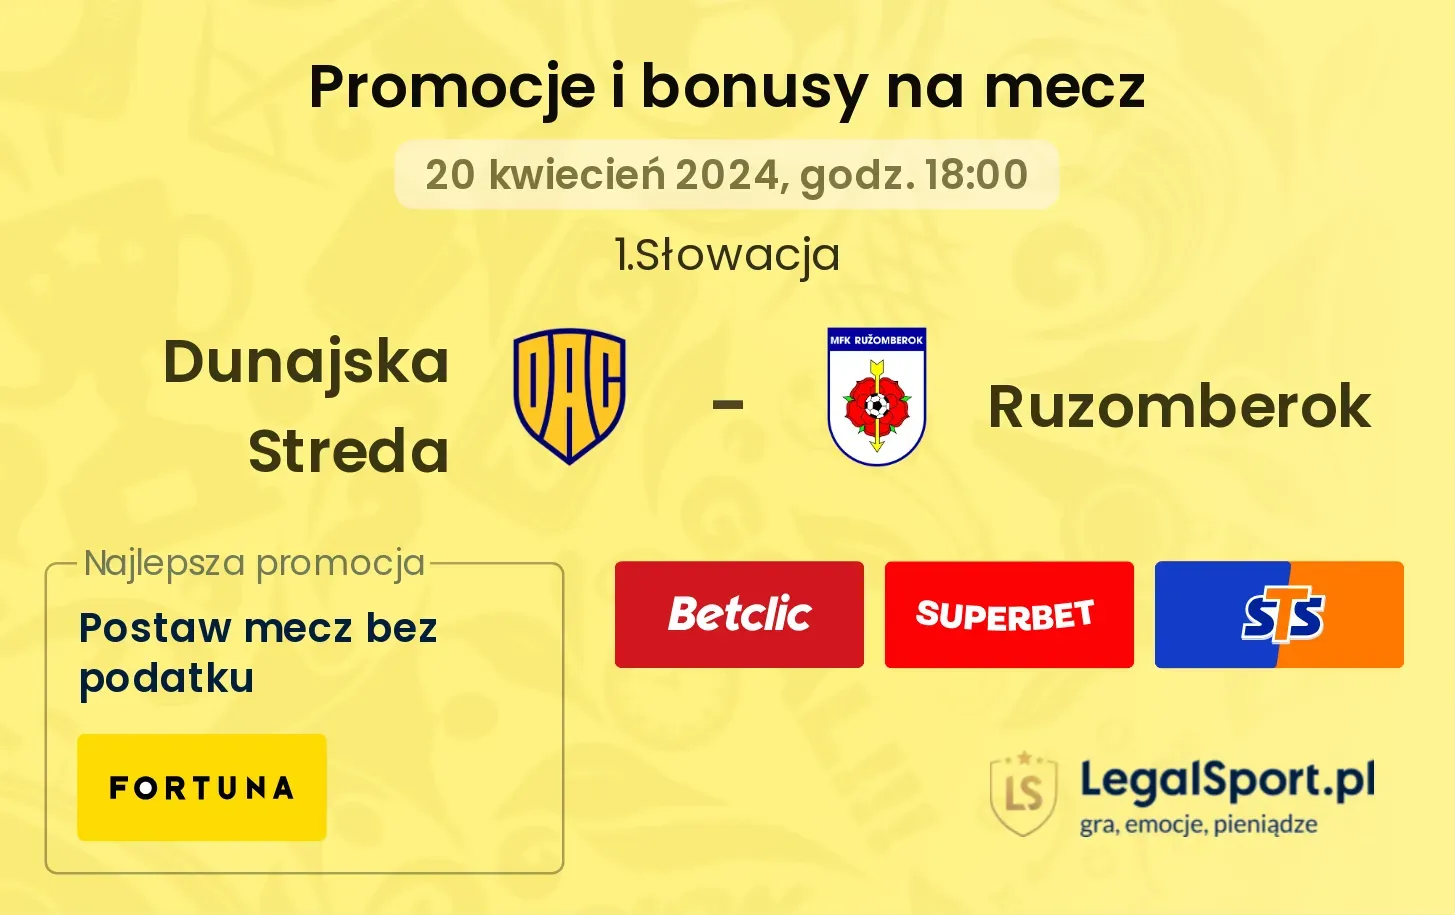 Dunajska Streda  - Ruzomberok promocje bonusy na mecz